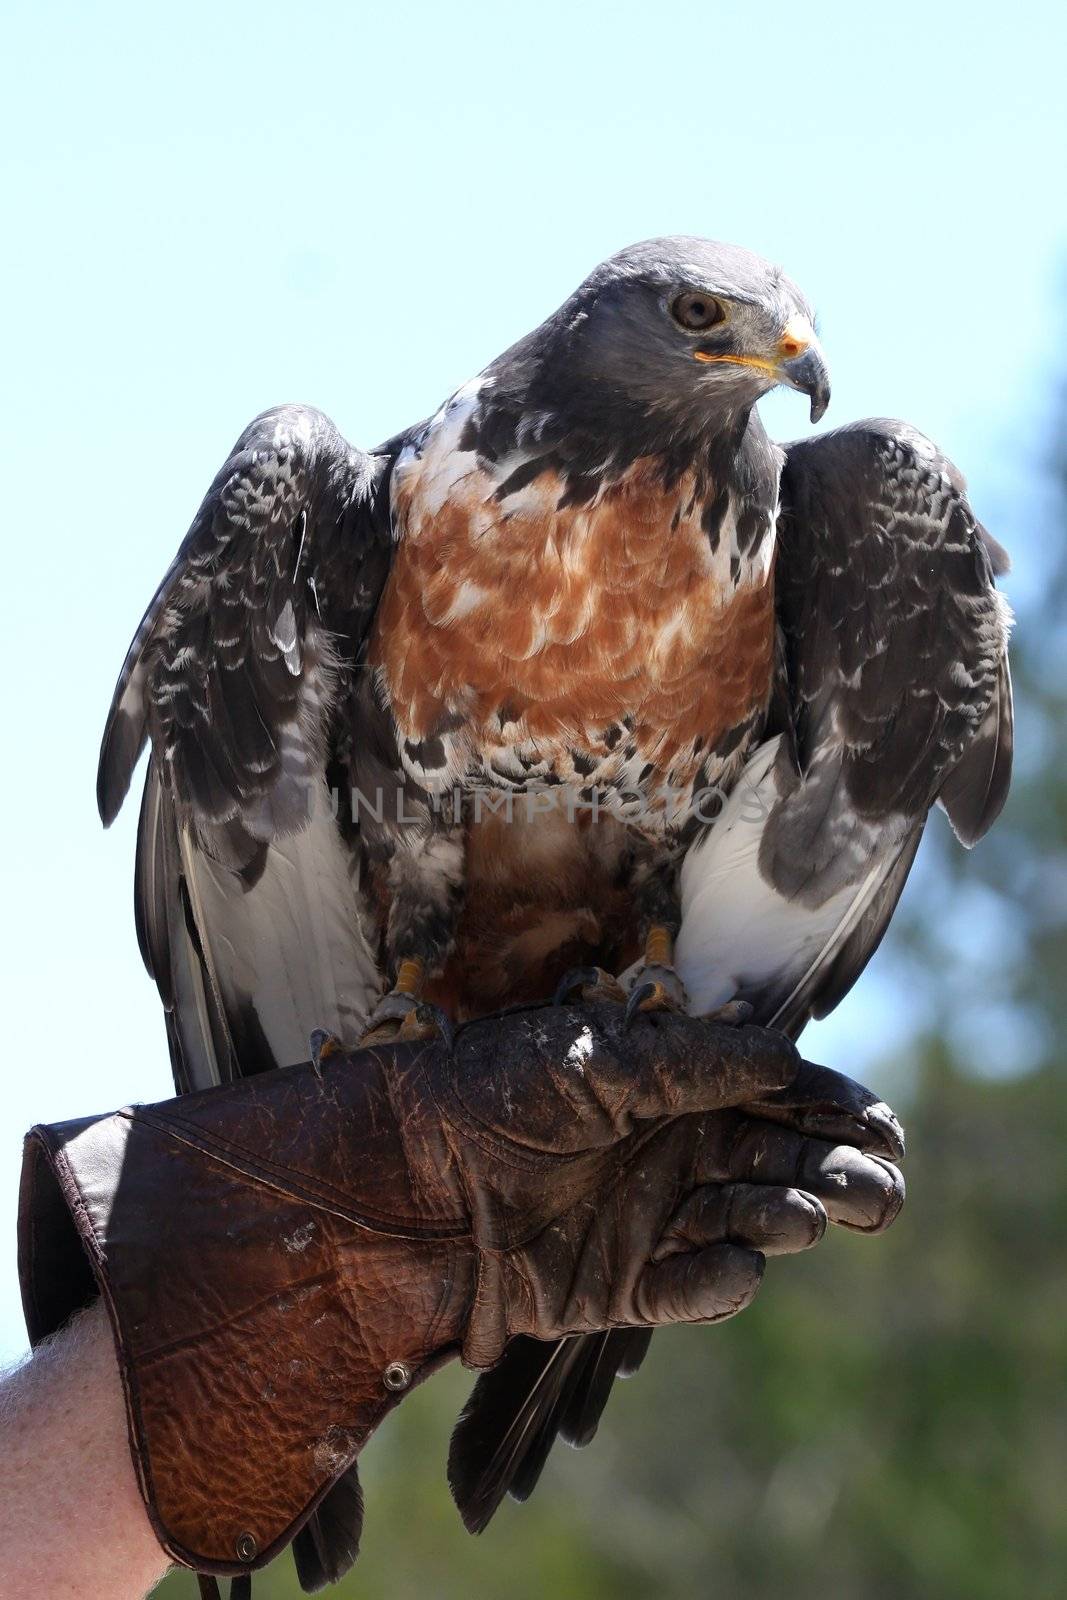 Large Jackal Buzzard bird perched on it's handlers glove